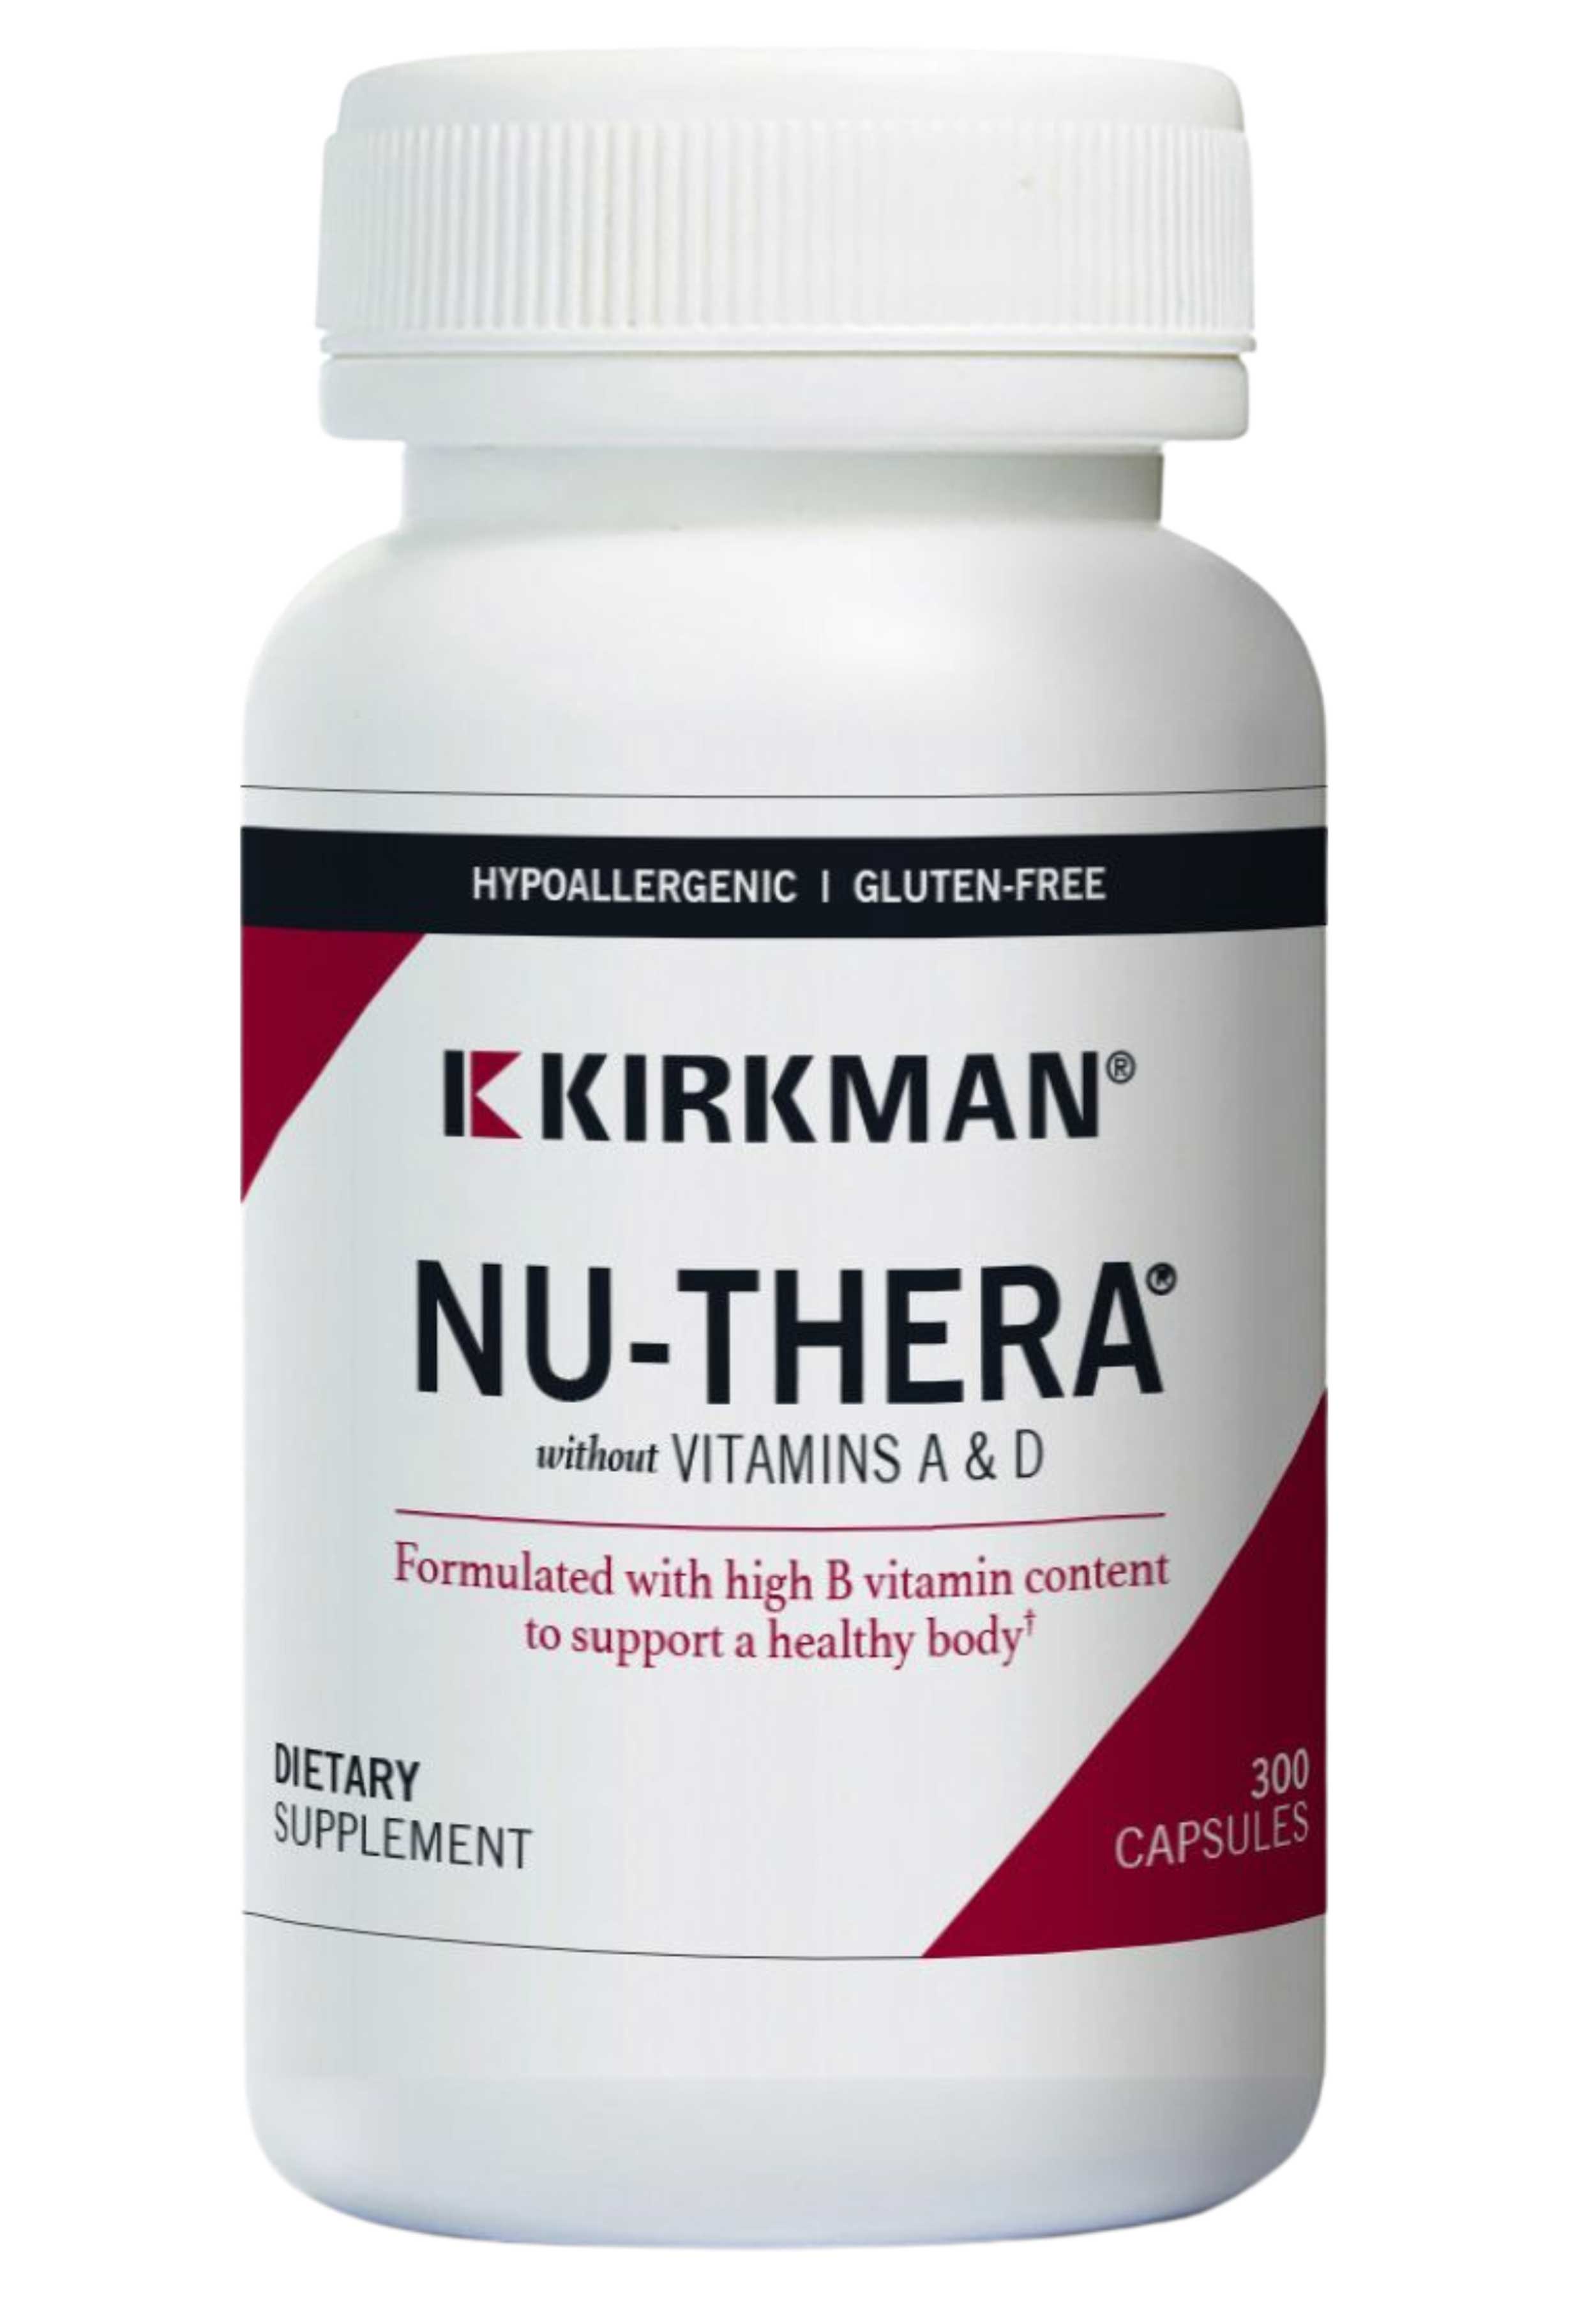 Kirkman Nu-Thera without Vitamins A & D